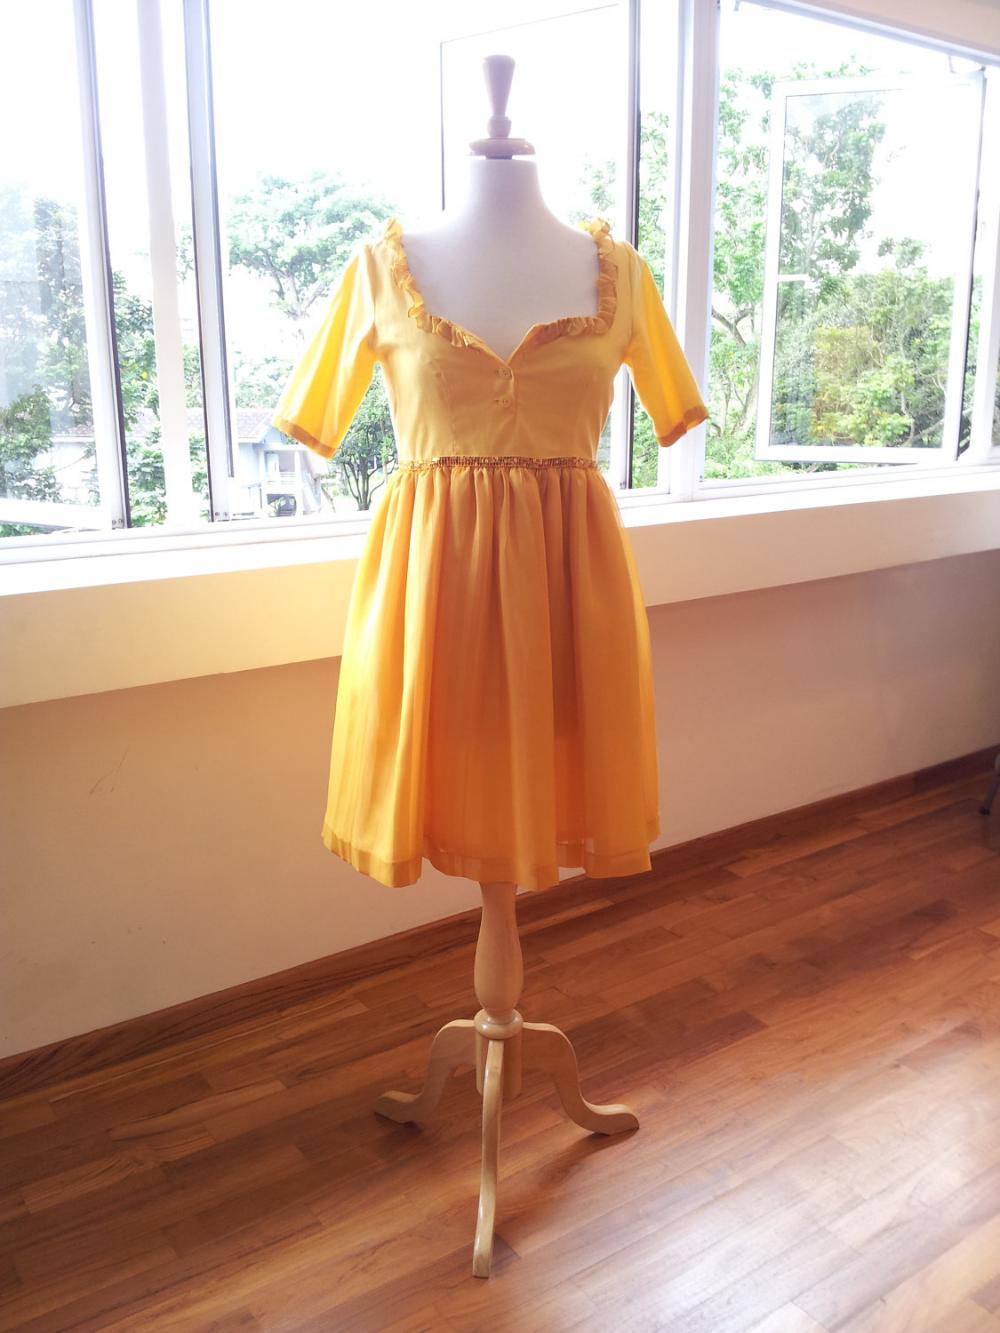 Romantic Yellow Dess - Crazy Happy Sun Dress With Alice In Wonderland Feel